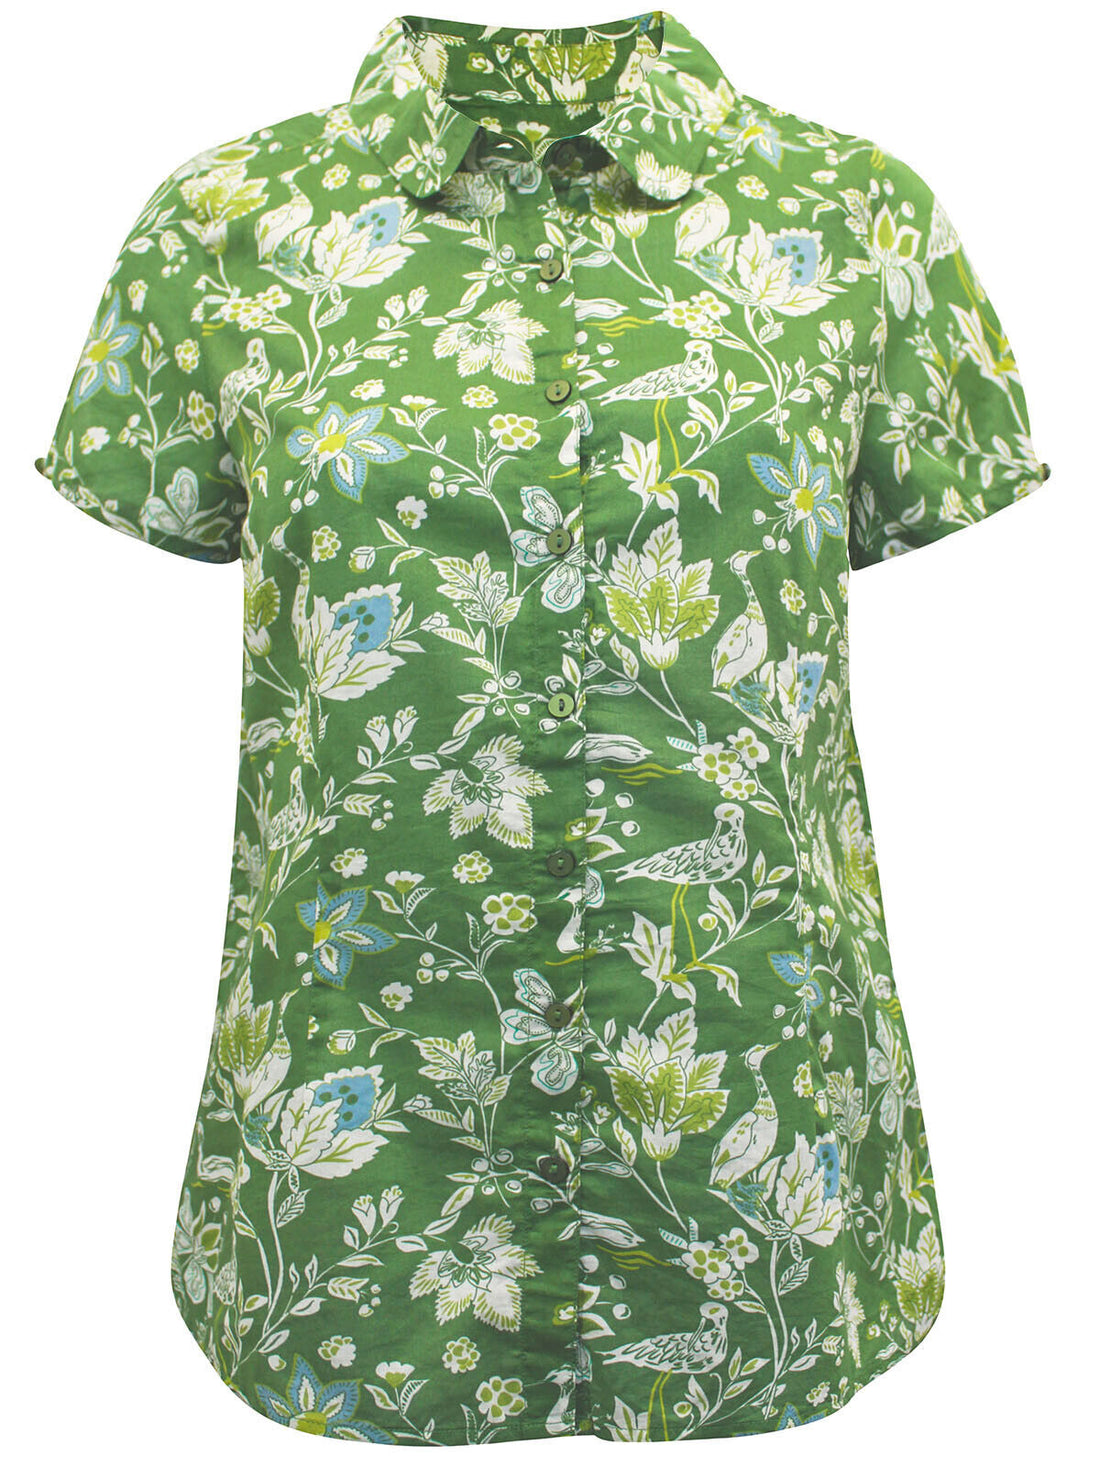 EX Seasalt Green Rushmaker Short Sleeve Shirt Sizes 8 12 14 16 18 20 RRP £42.95